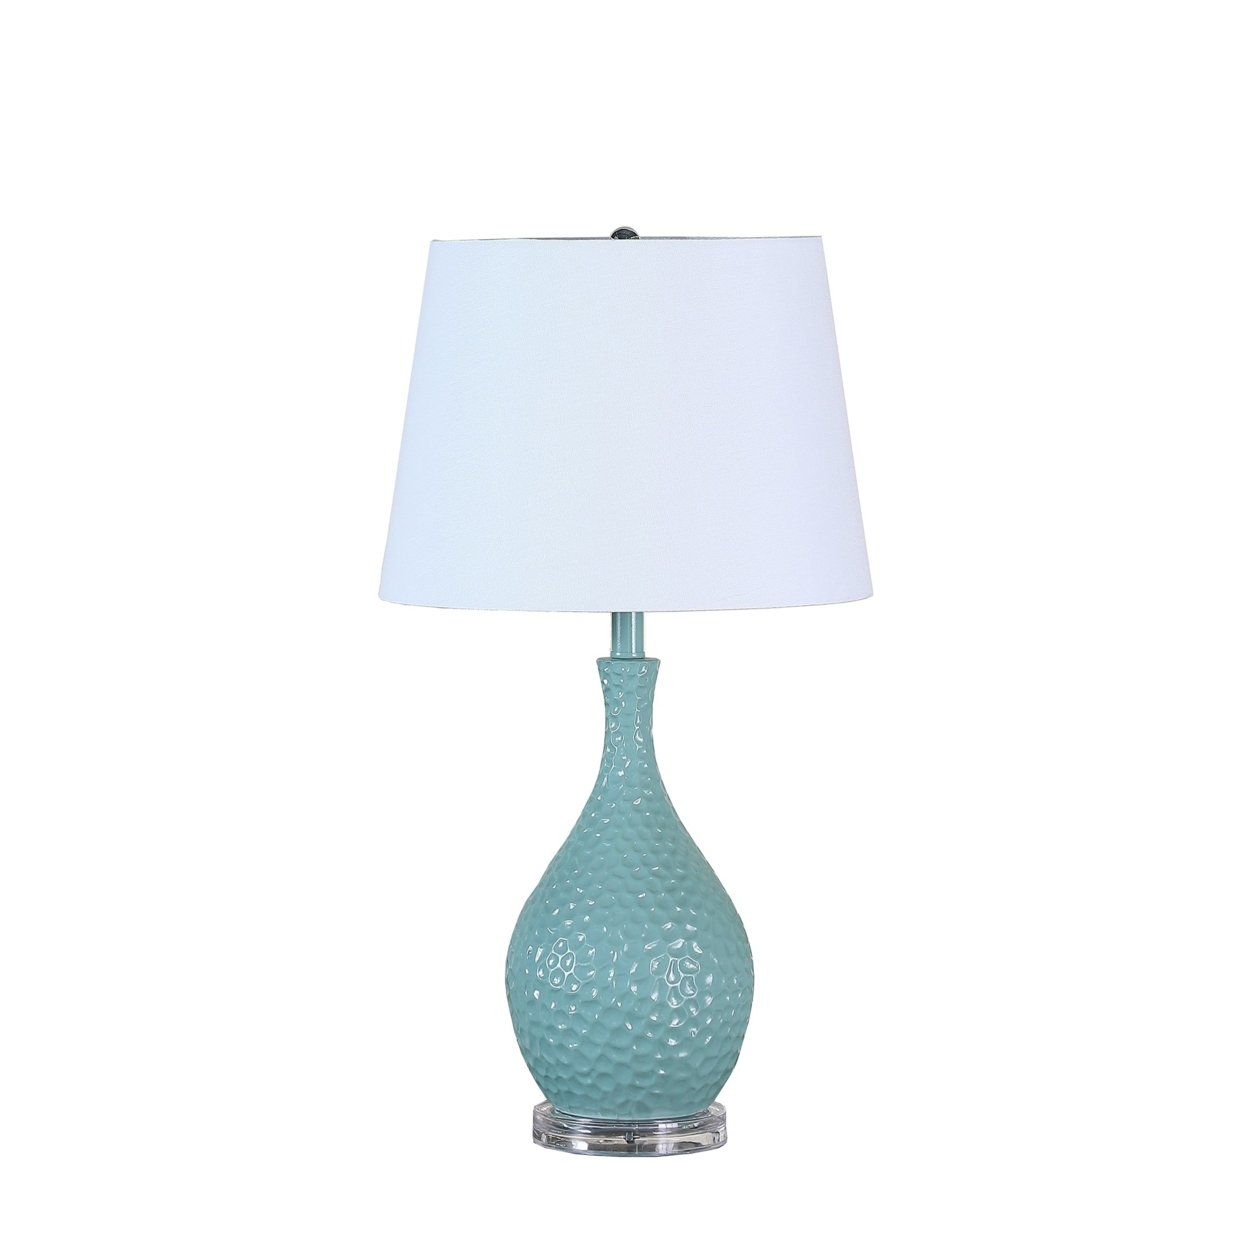 Pin Bowl Design Metal Table Lamp With Hammered Pattern, Blue- Saltoro Sherpi